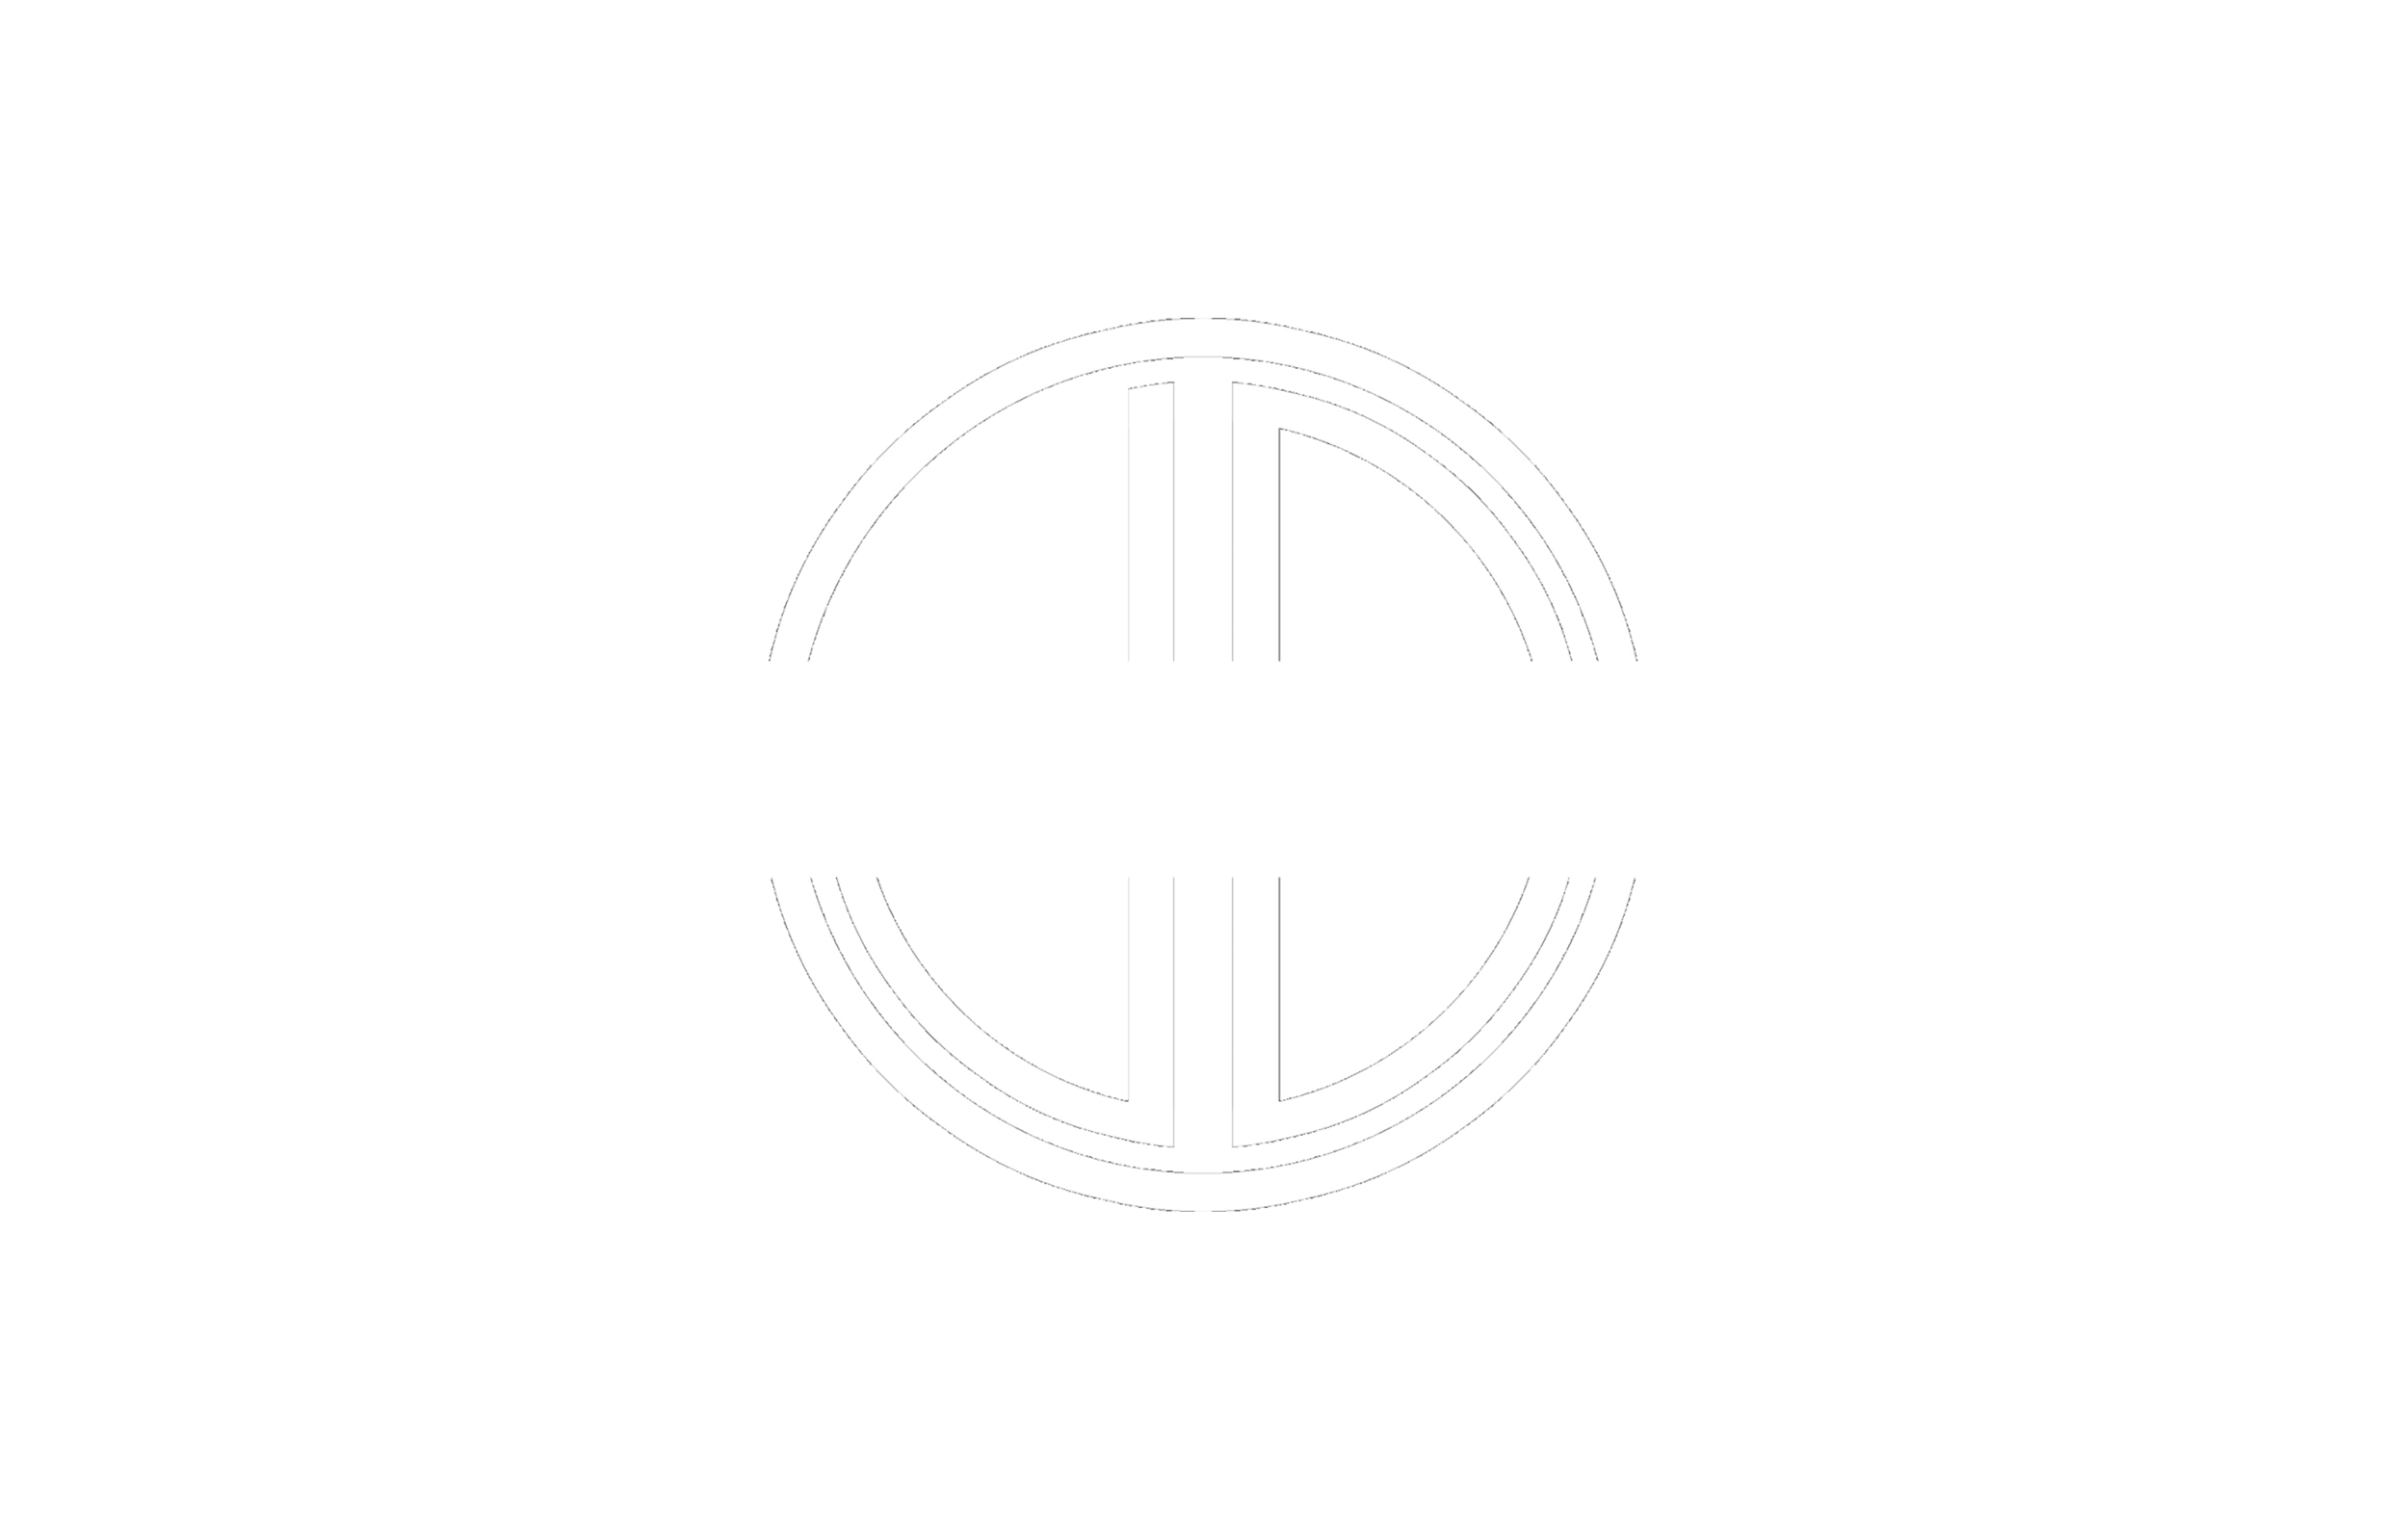 JD Moore Portfolios, Ltd Co.